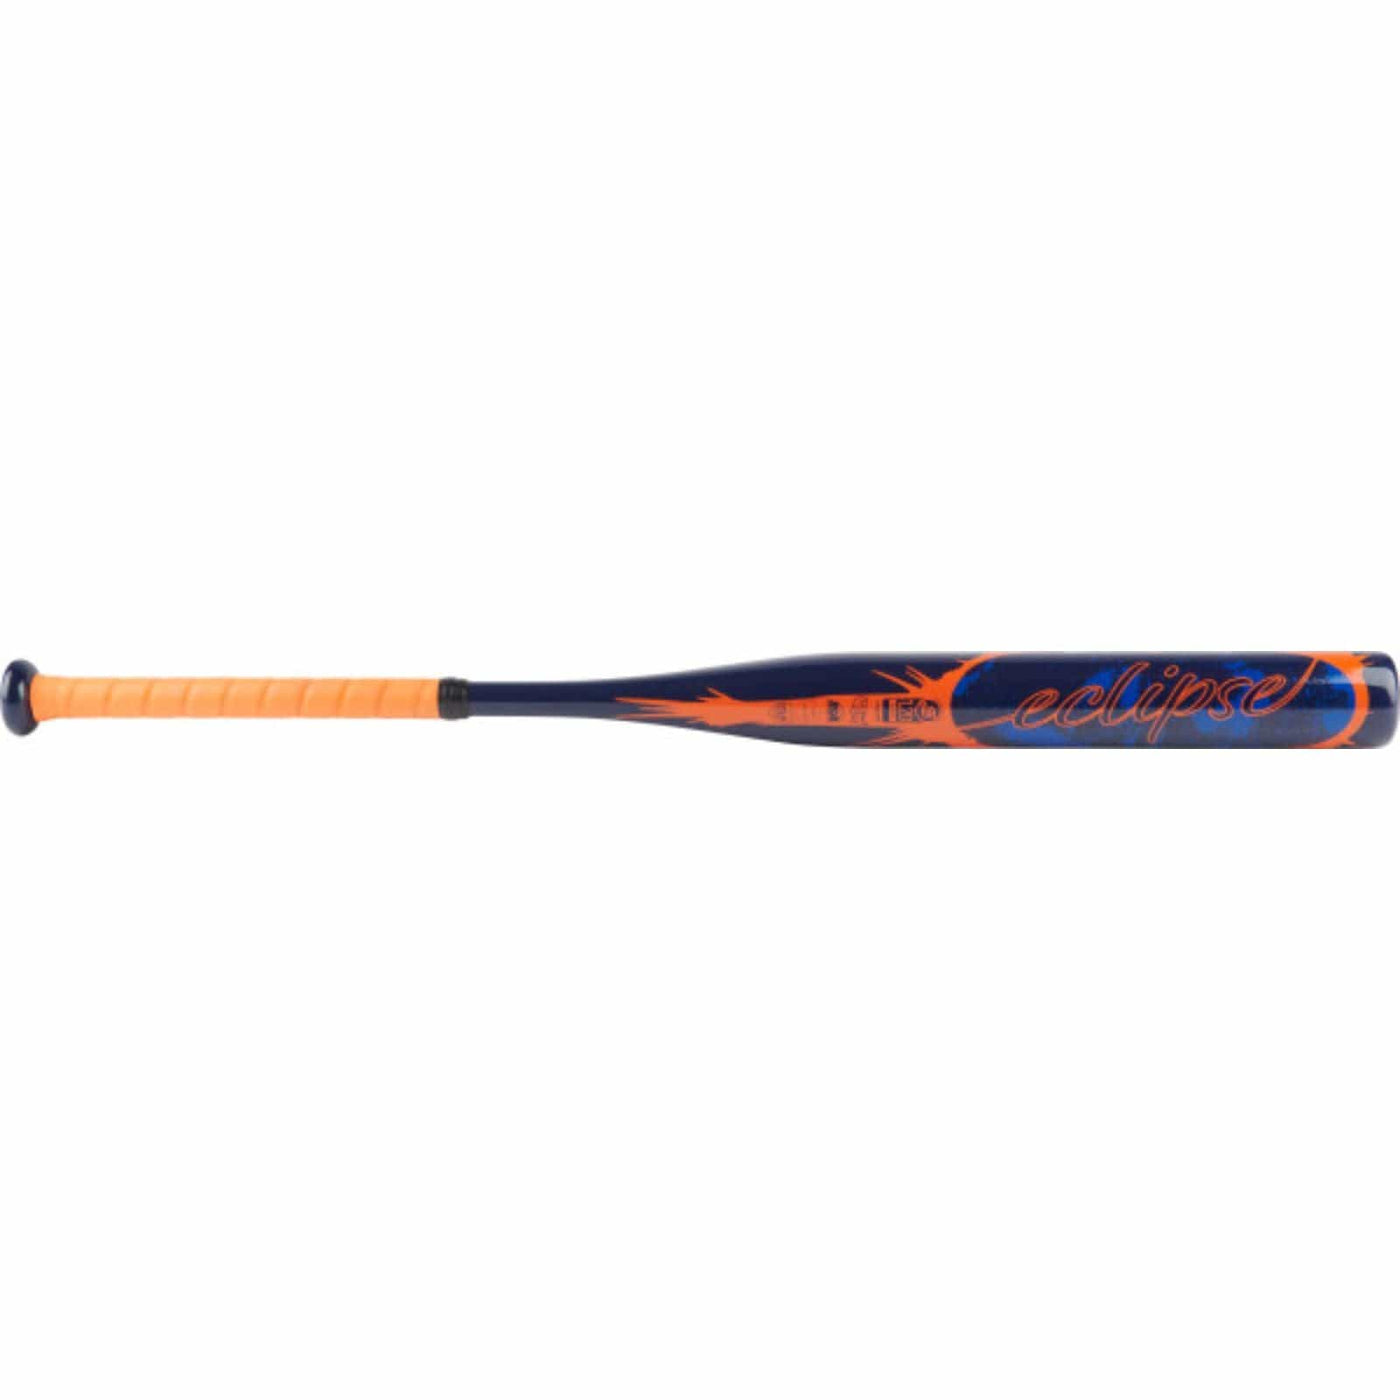 Rawlings Rawlings Eclipse Softball Bat -12 29in/17oz Sports